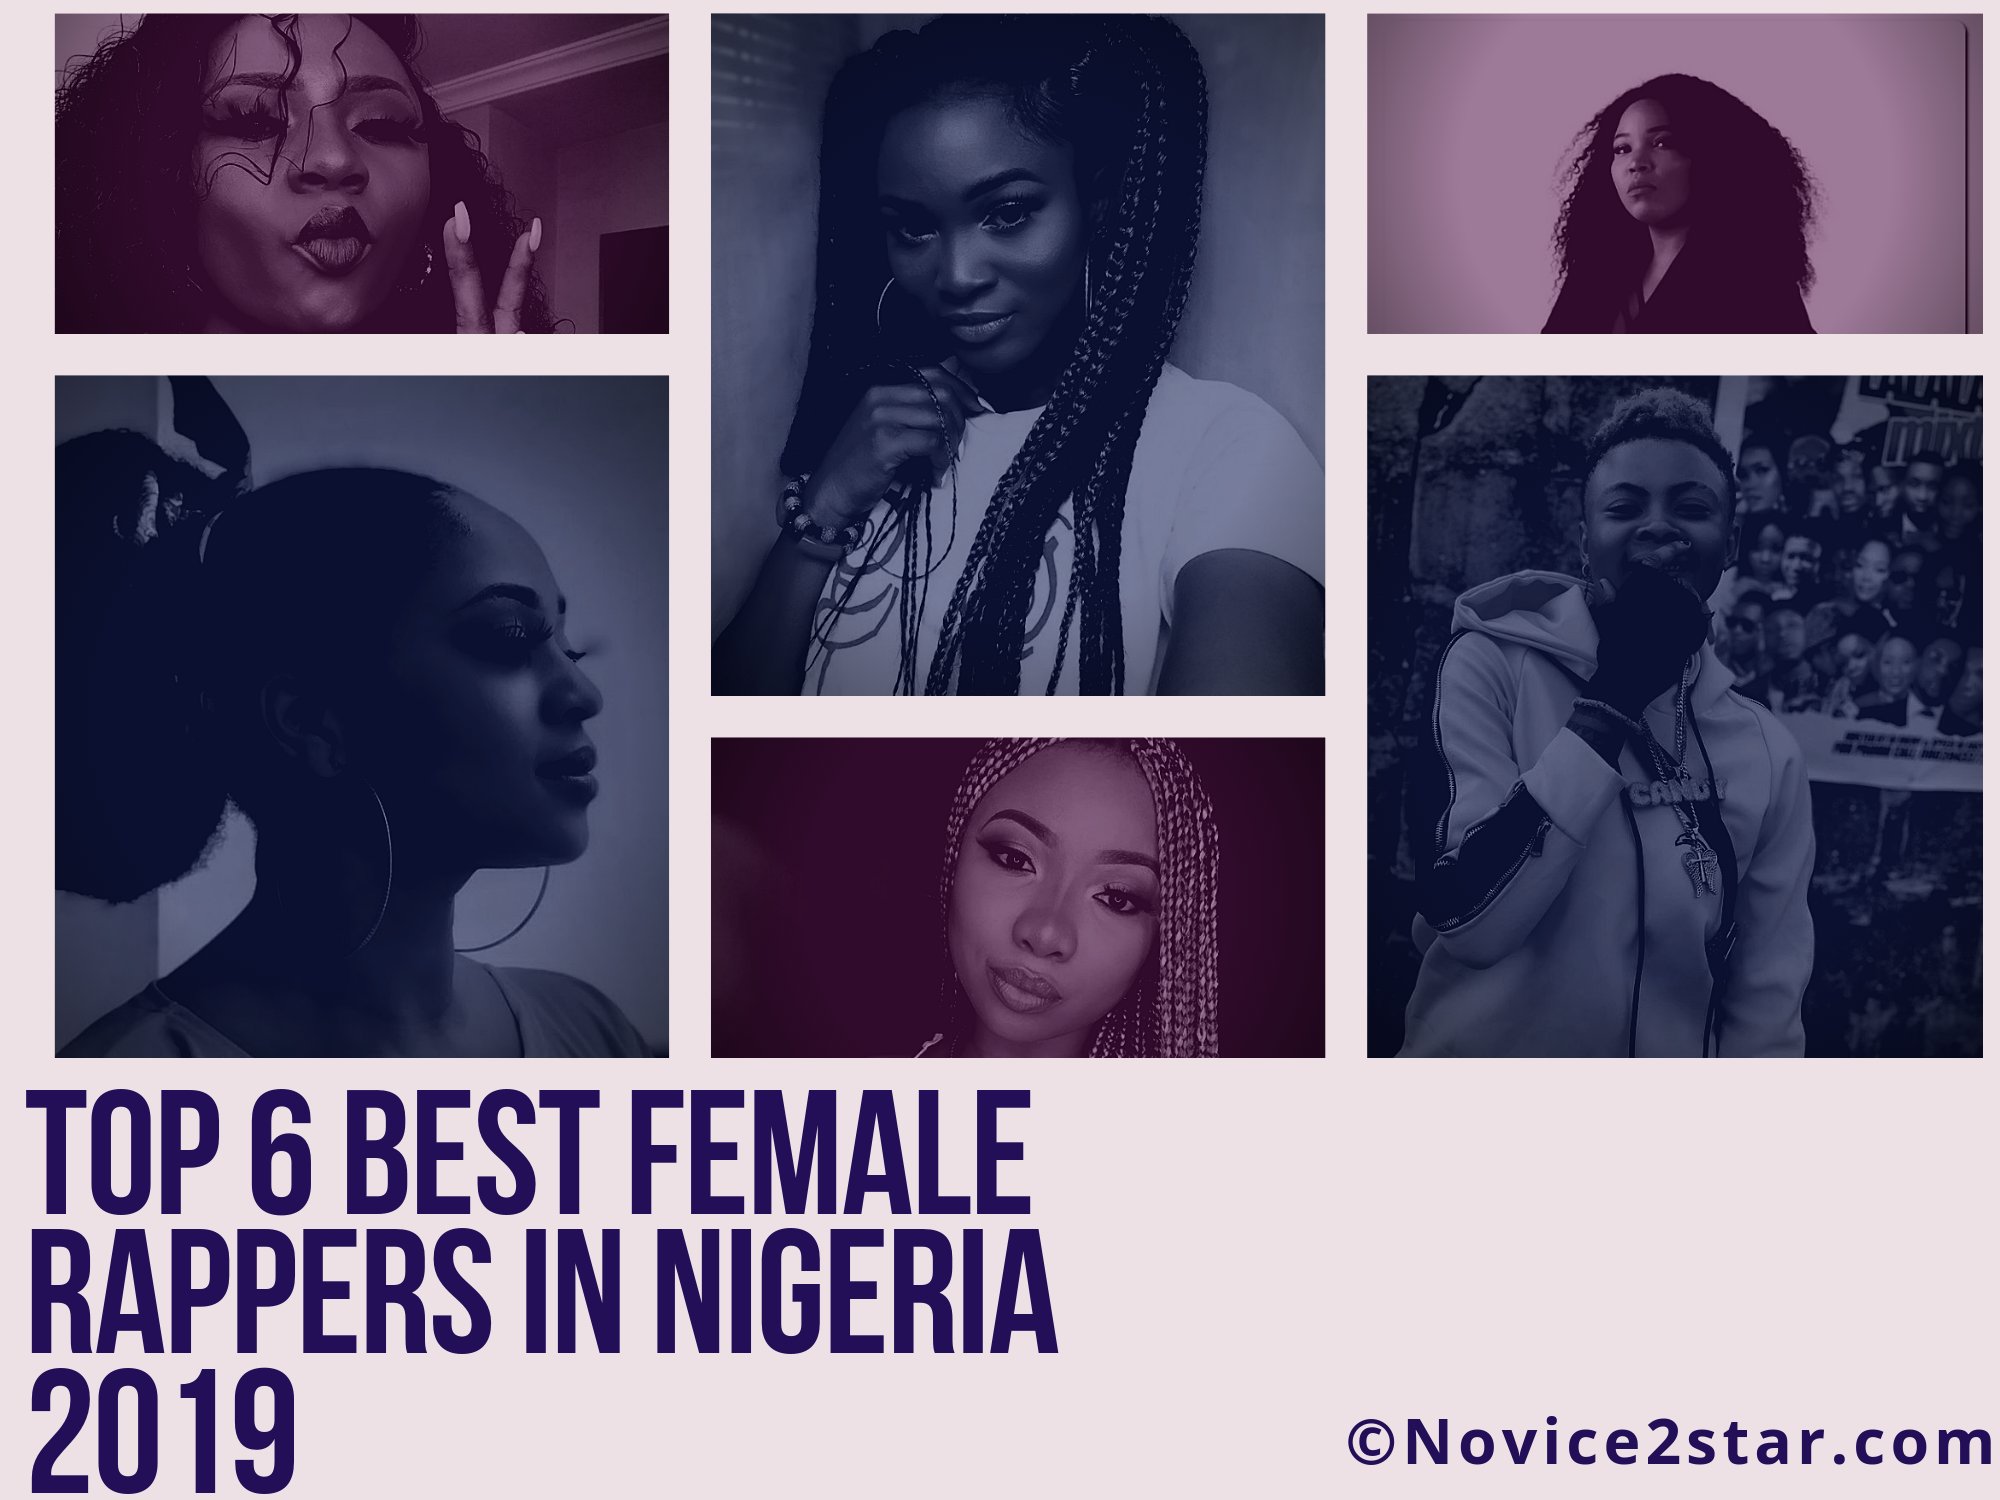 Top 6 Best Female Rappers in Nigeria 2019